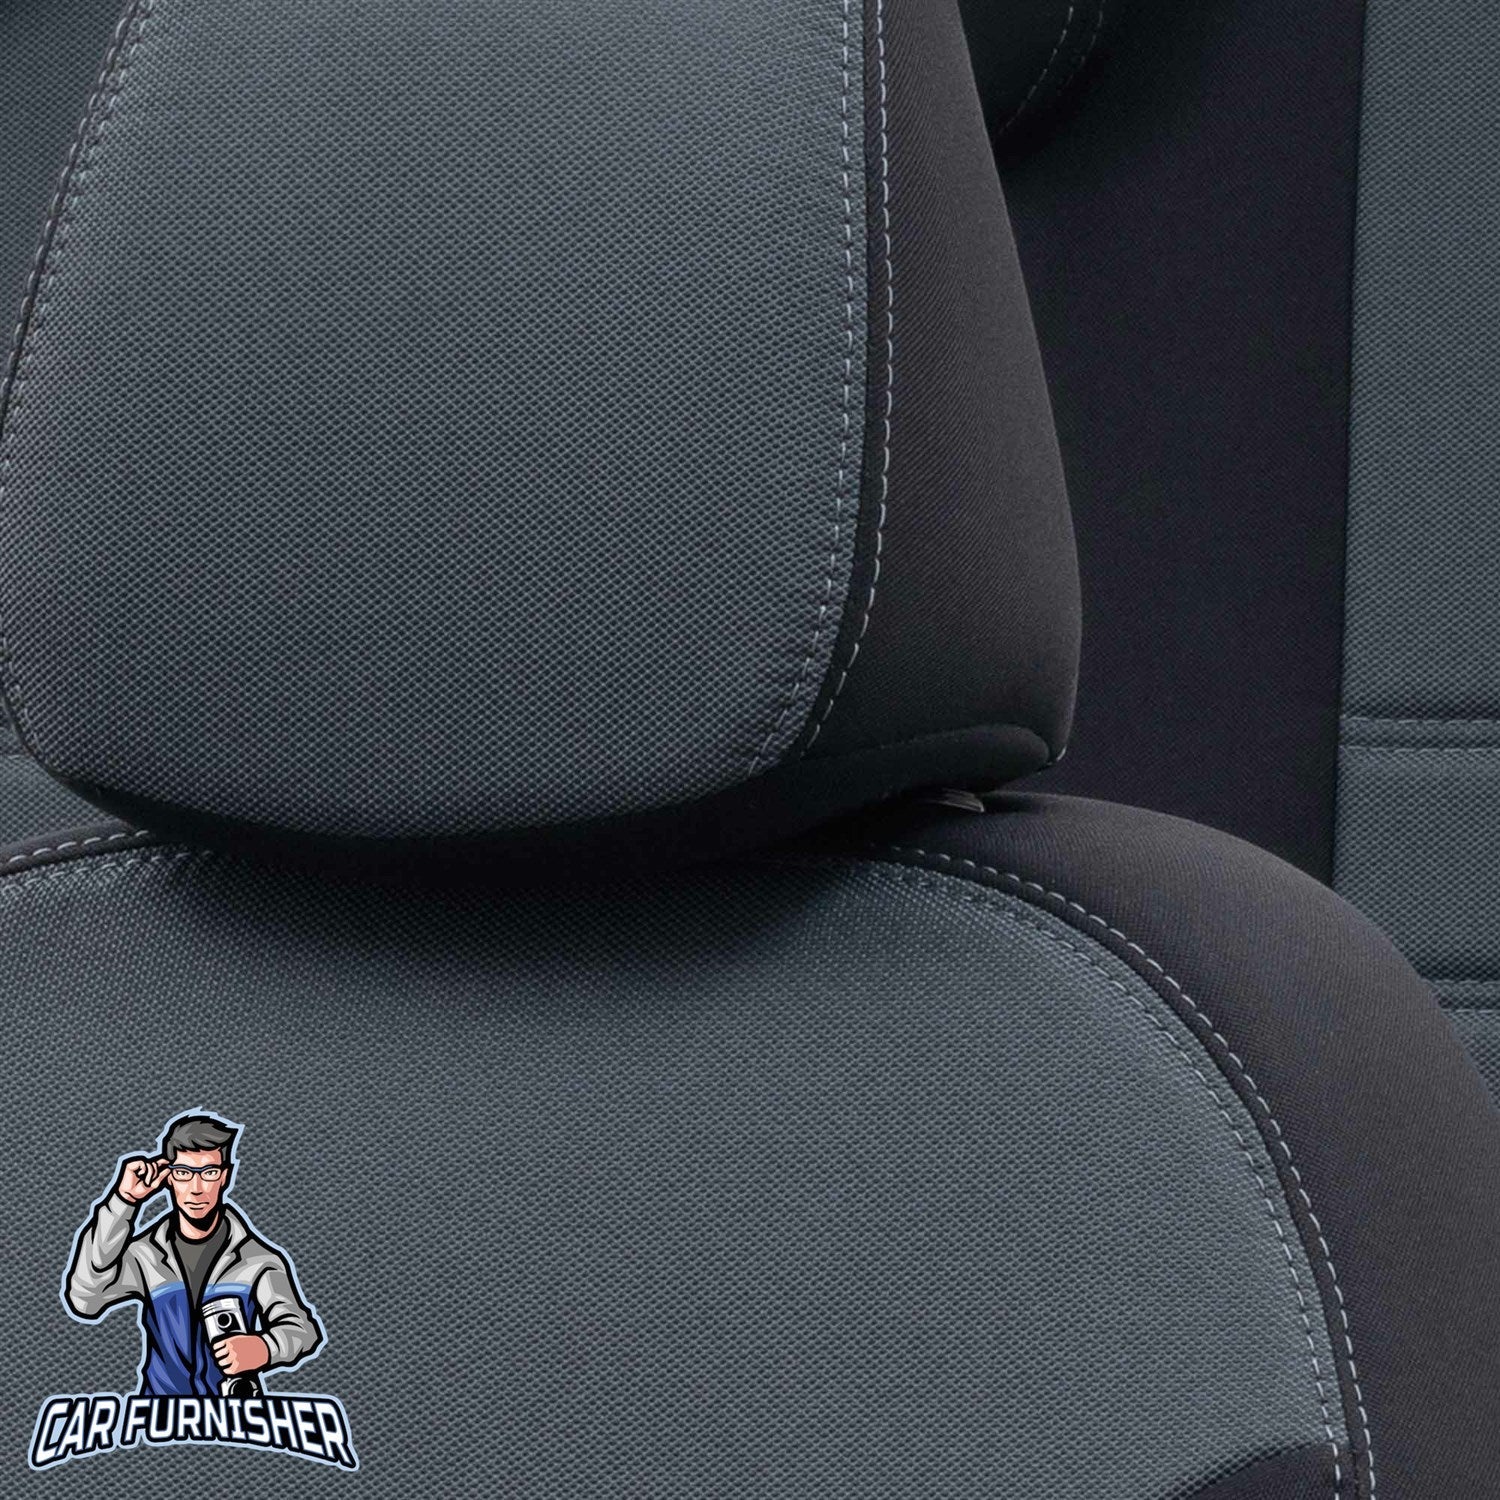 Skoda Roomster Car Seat Covers 2007-2014 Original Design Smoked Black Jacquard Fabric